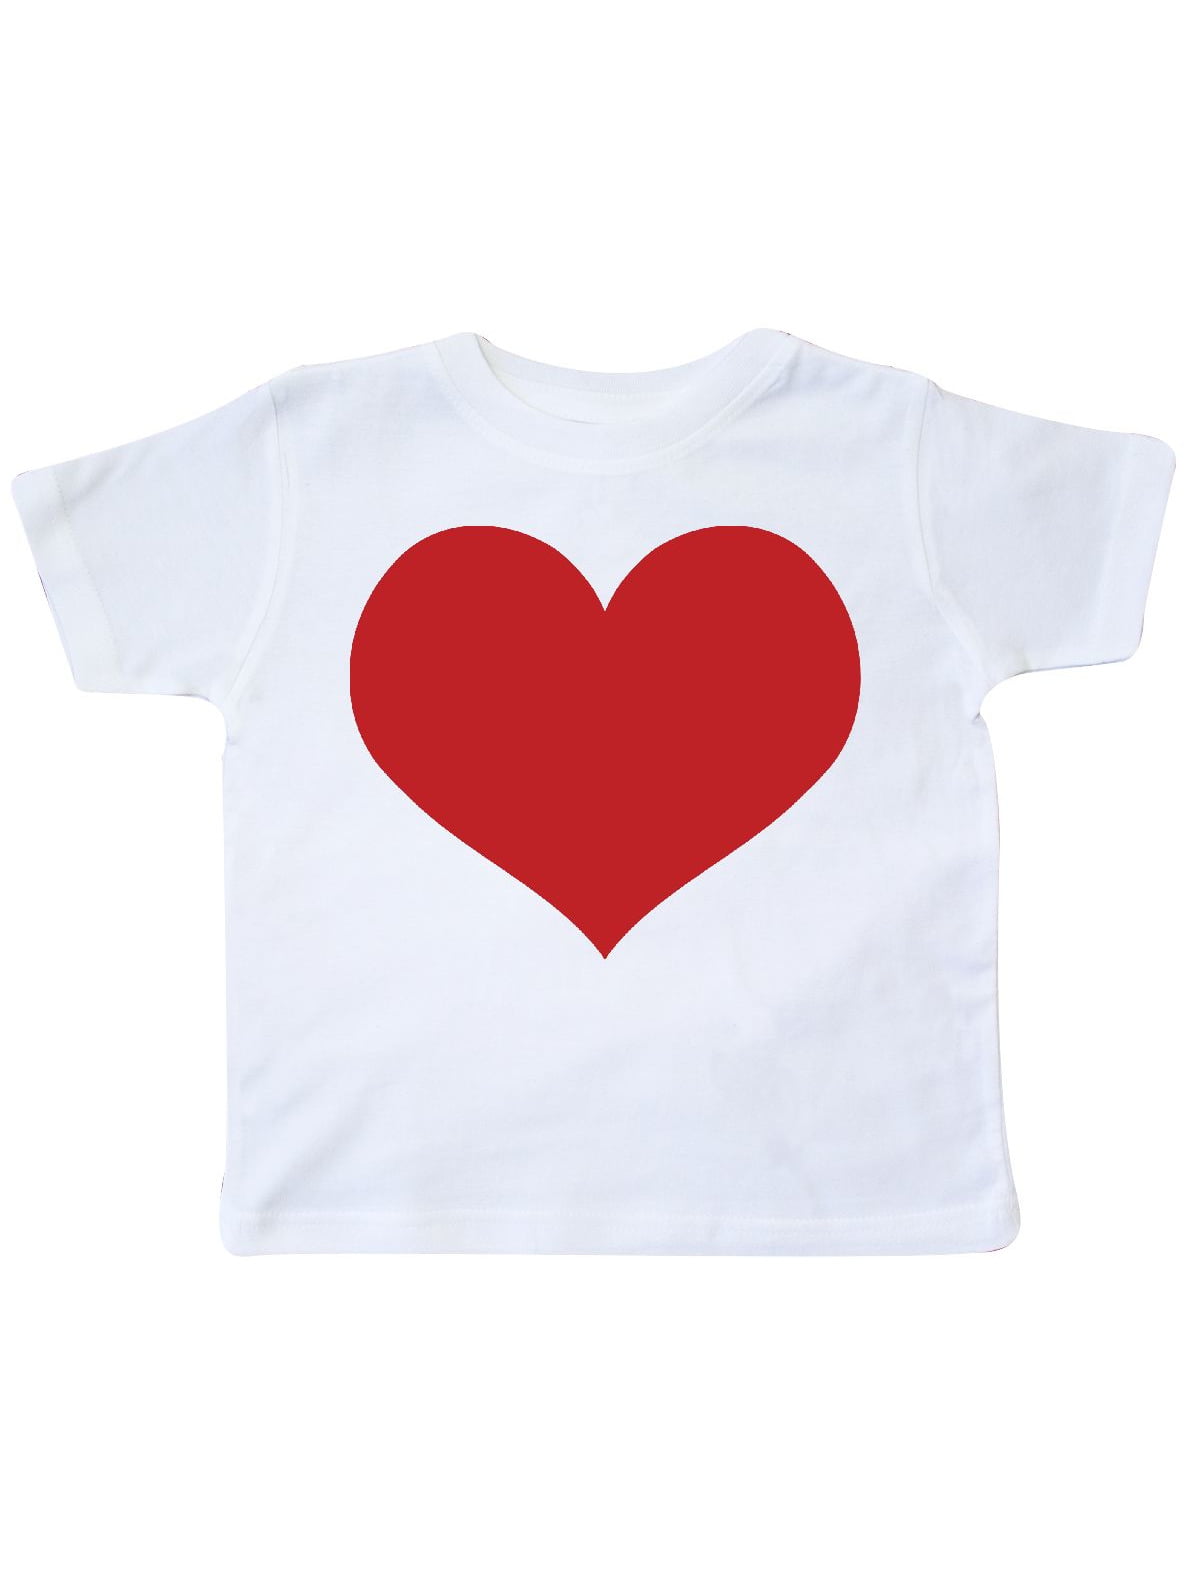 INKtastic - Red Heart Valentine Toddler T-Shirt - Walmart.com